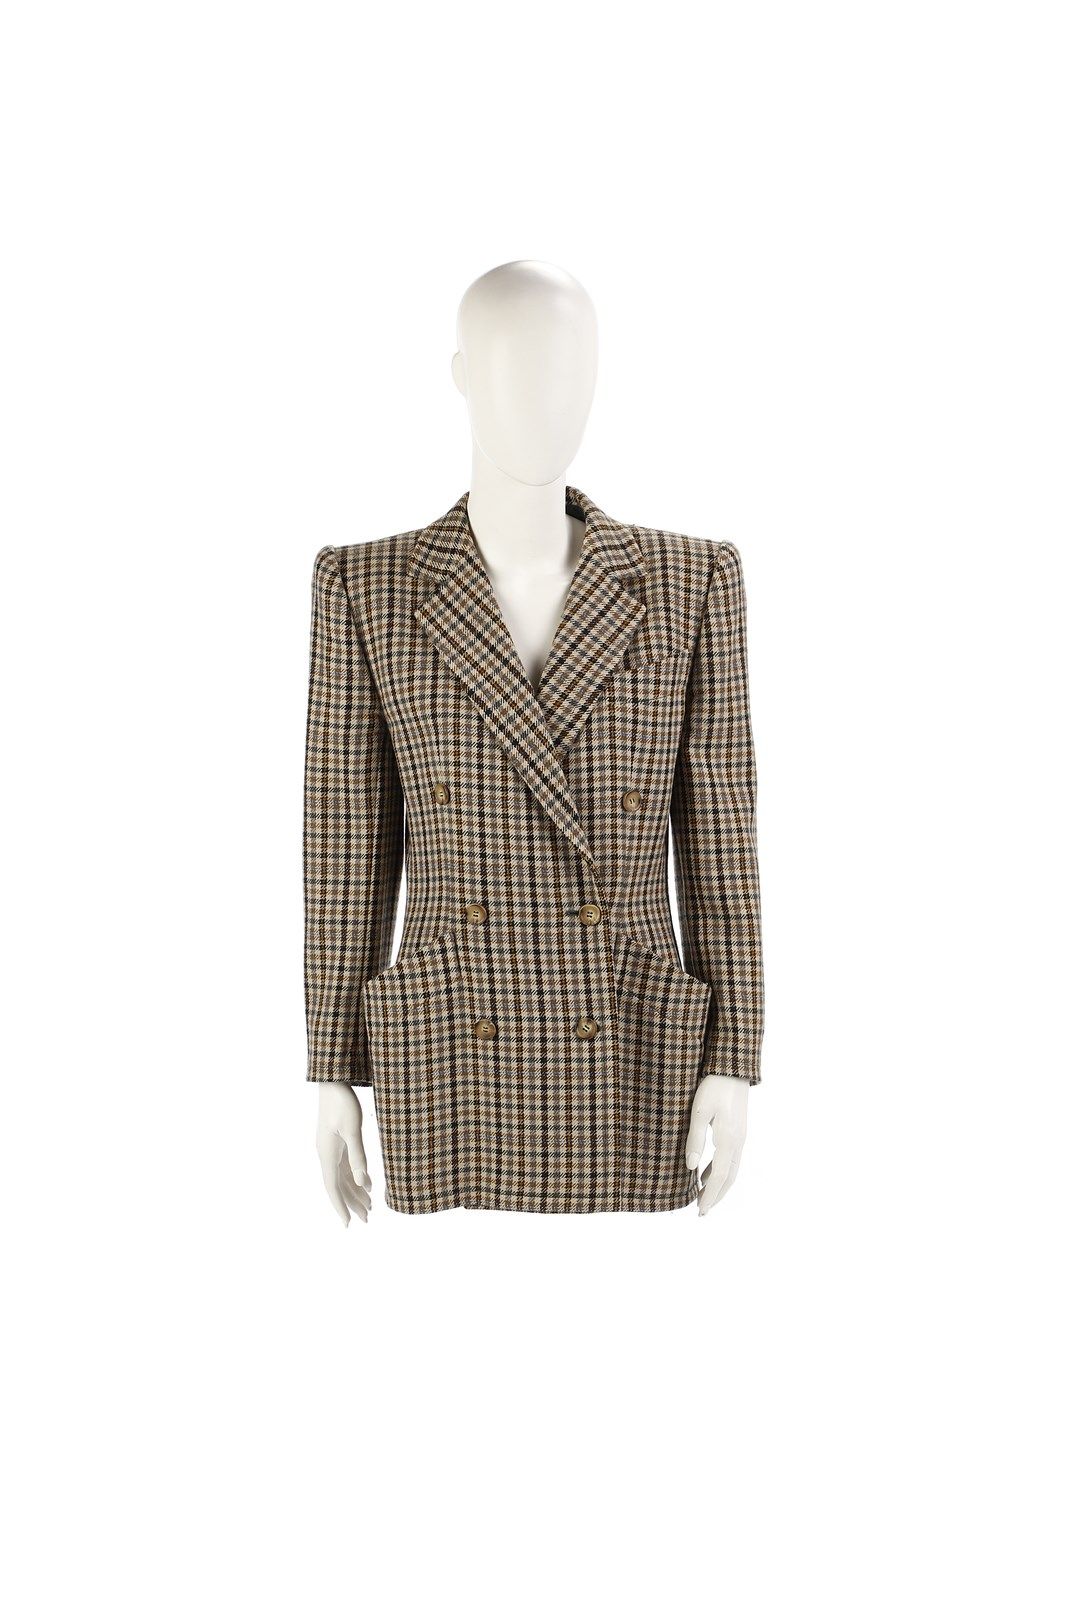 MARIO BORSATO Double-breasted jacket with tartan motif. Zweireihige Jacke mit Ta&hellip;